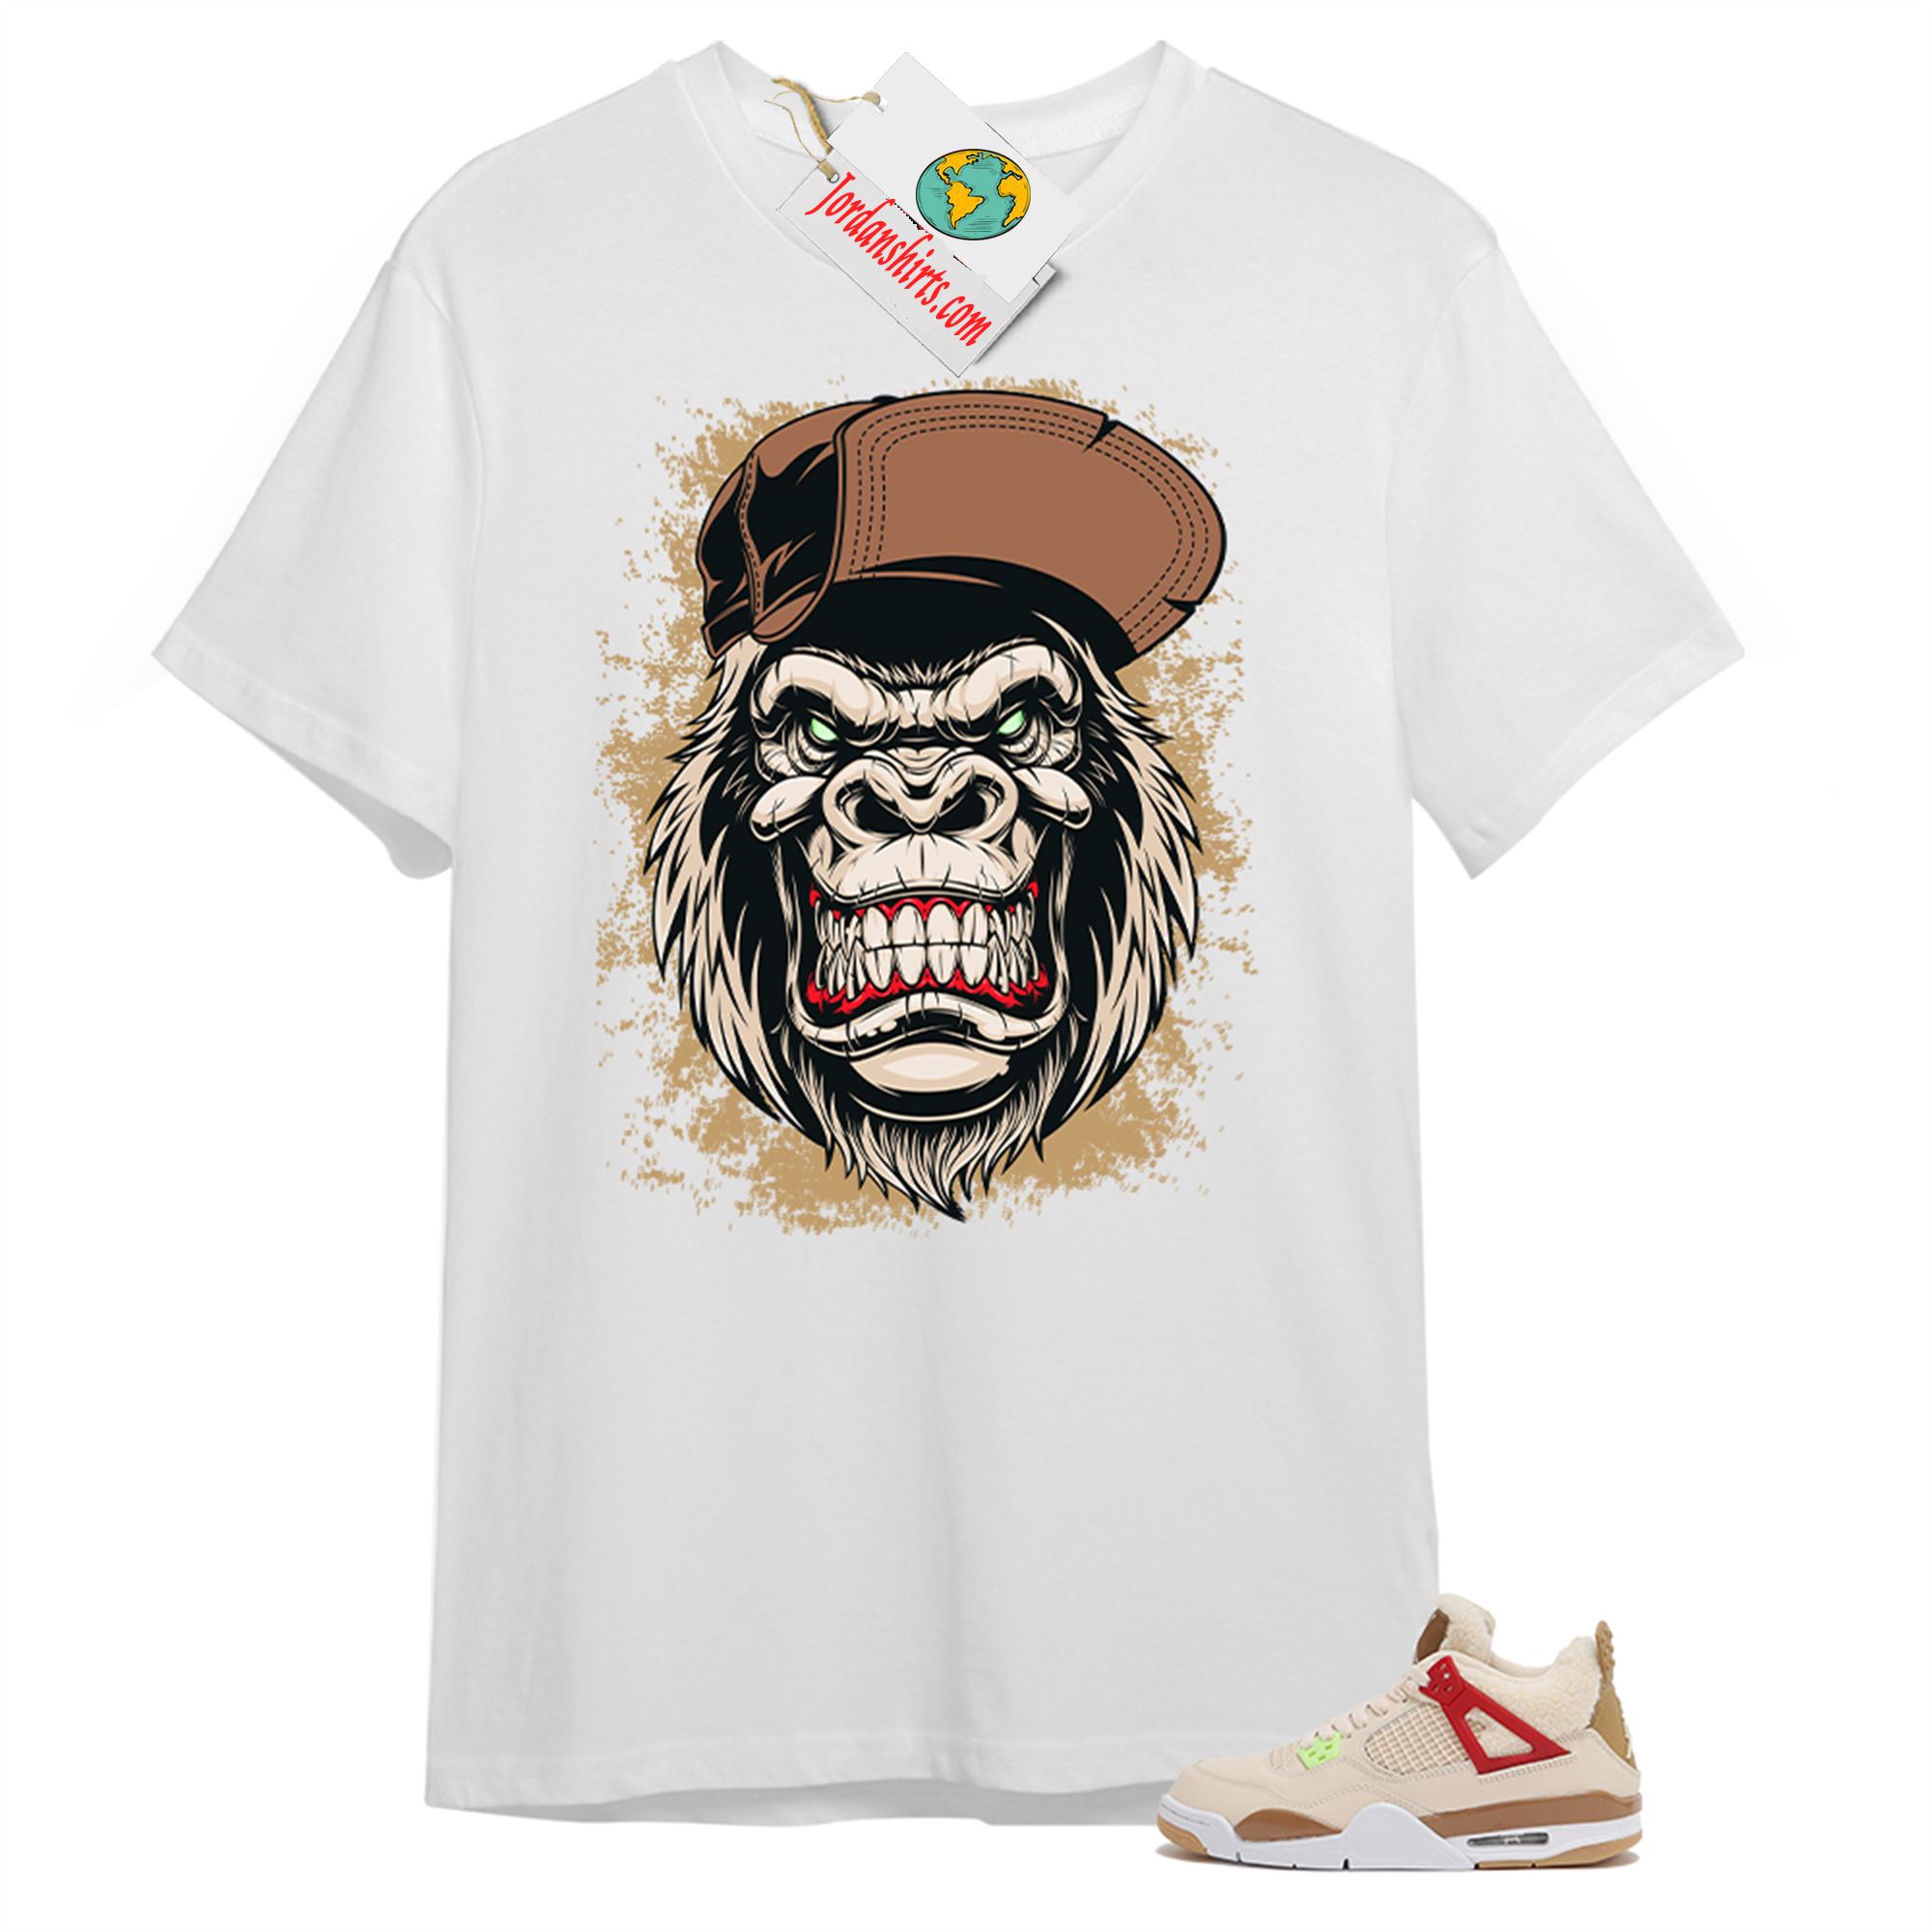 Jordan 4 Shirt, Ferocious Gorilla White T-shirt Air Jordan 4 Wild Things 4s Size Up To 5xl